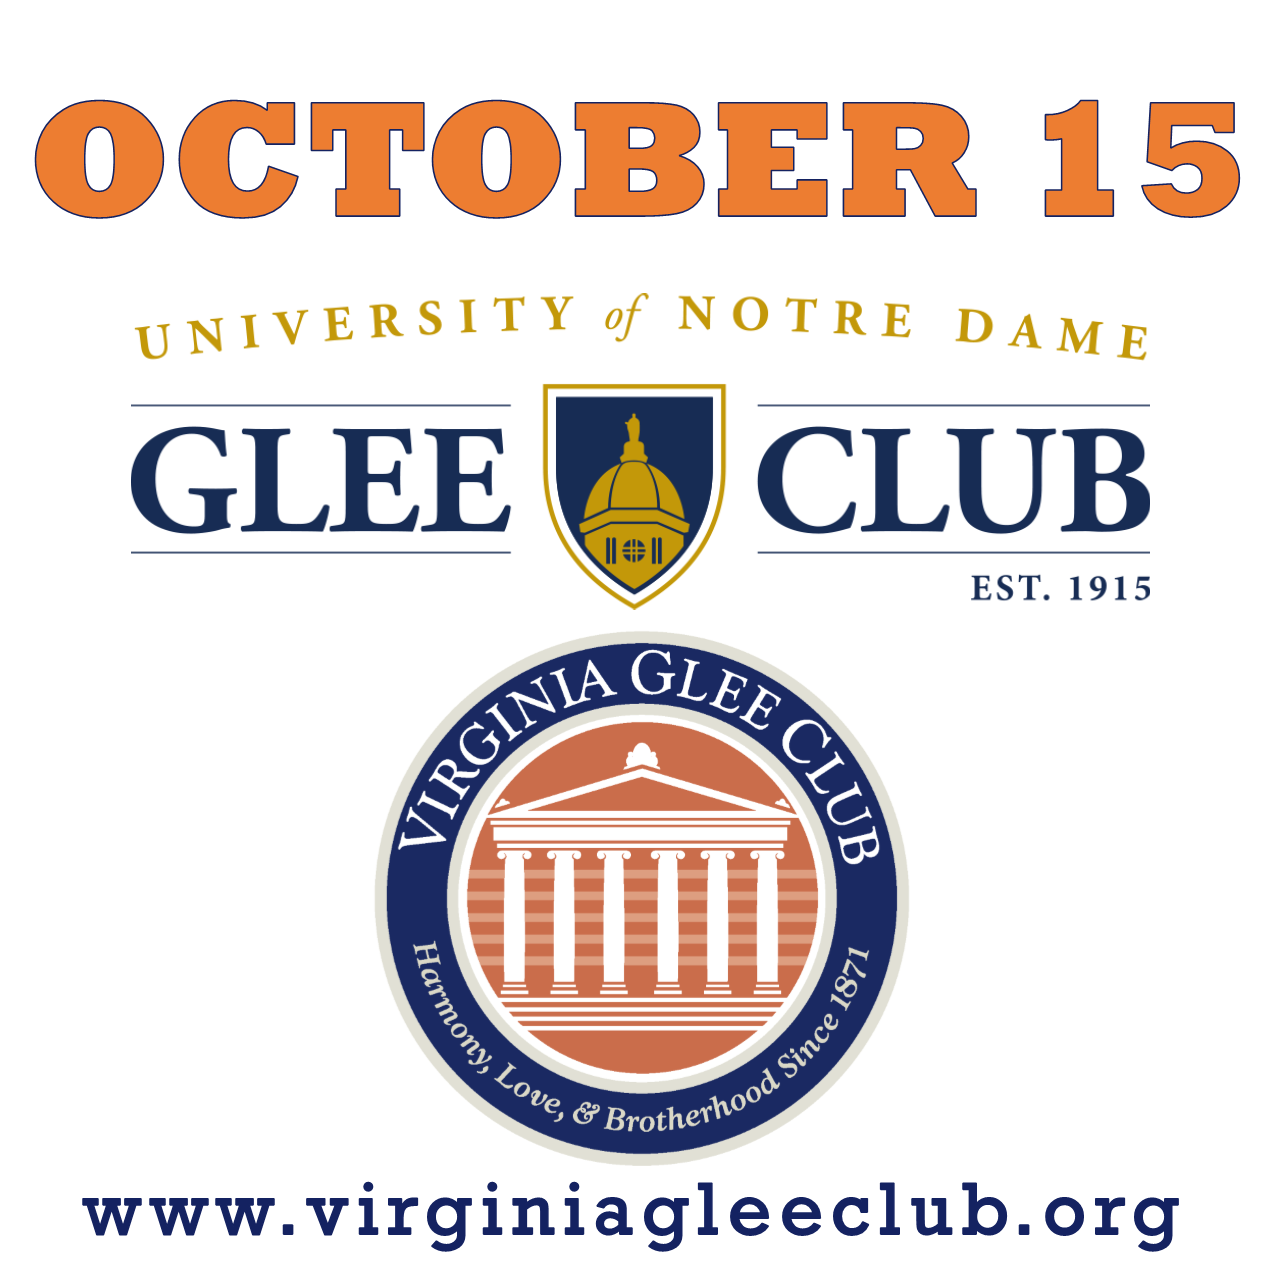 Notre Dame Glee Club & Virginia Glee Club